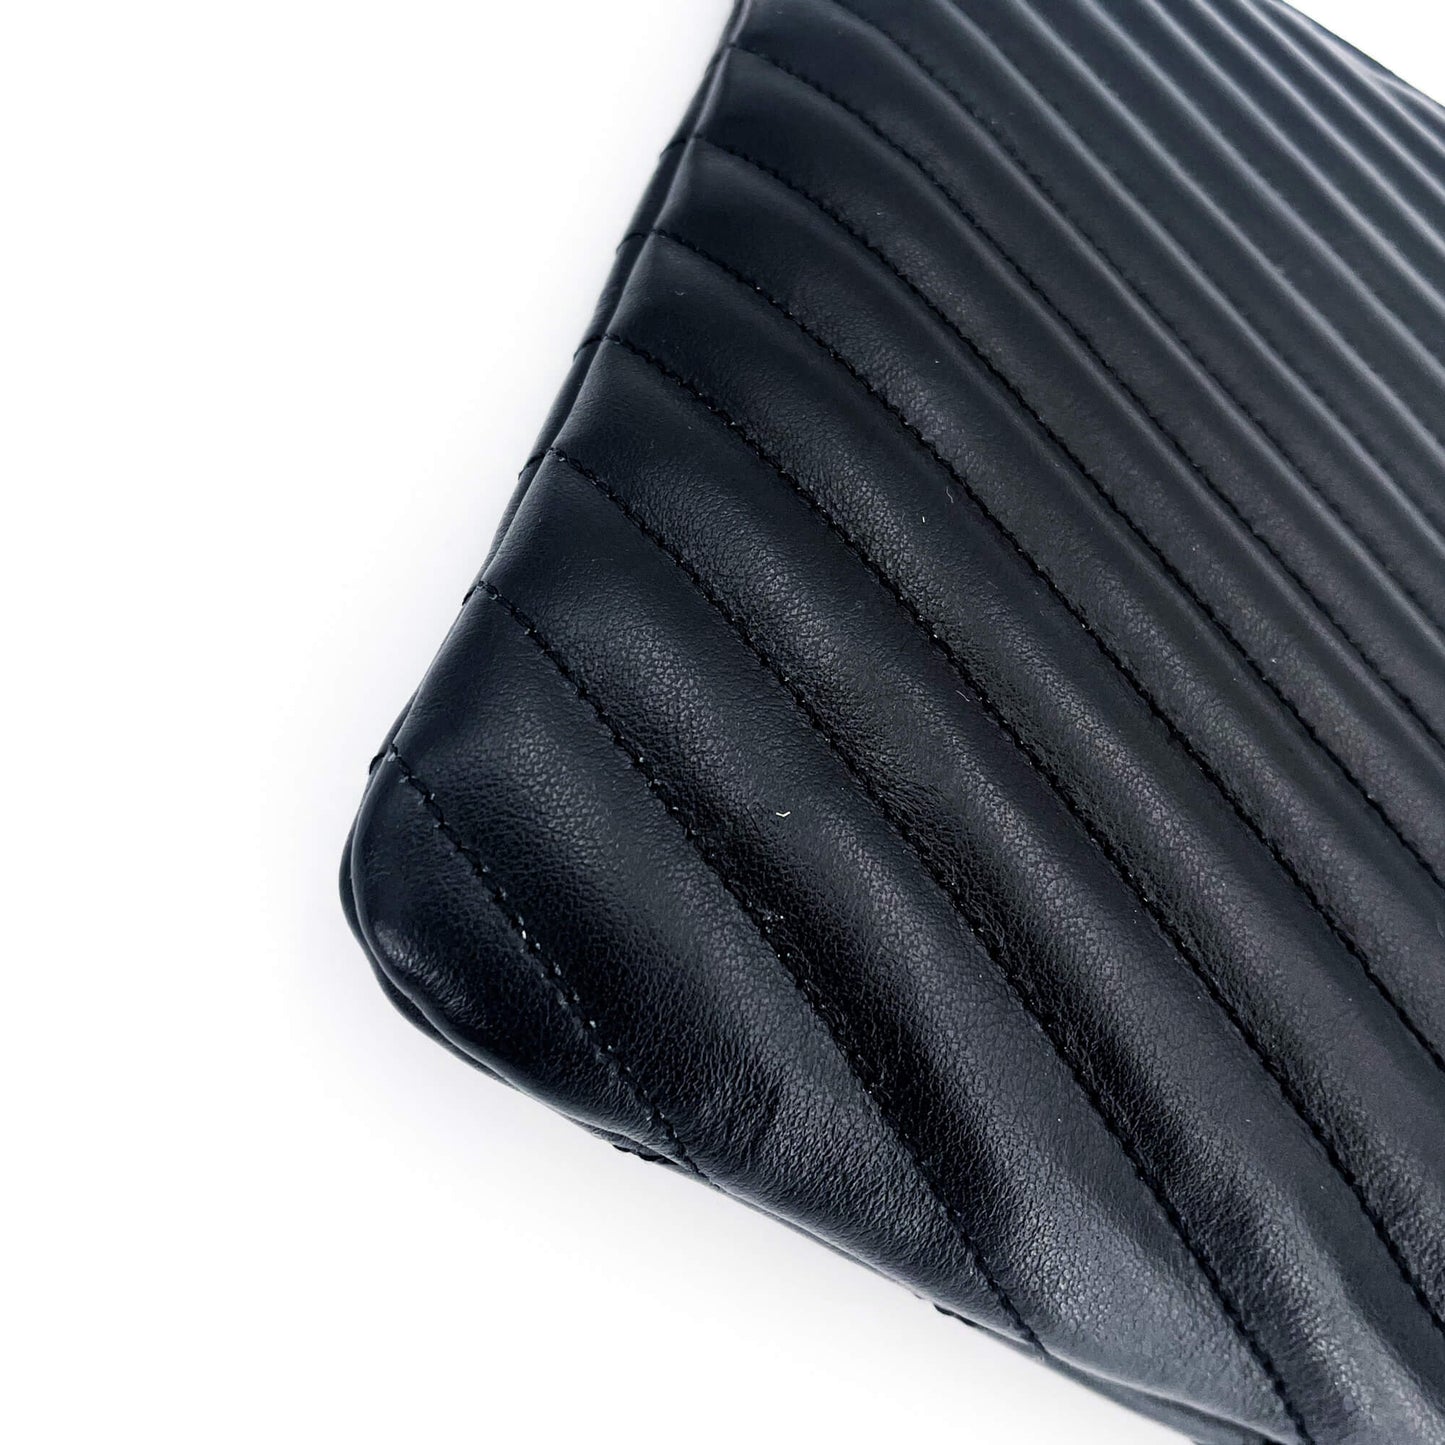 New jolie leather clutch bag Saint Laurent Black in Leather - 36358445